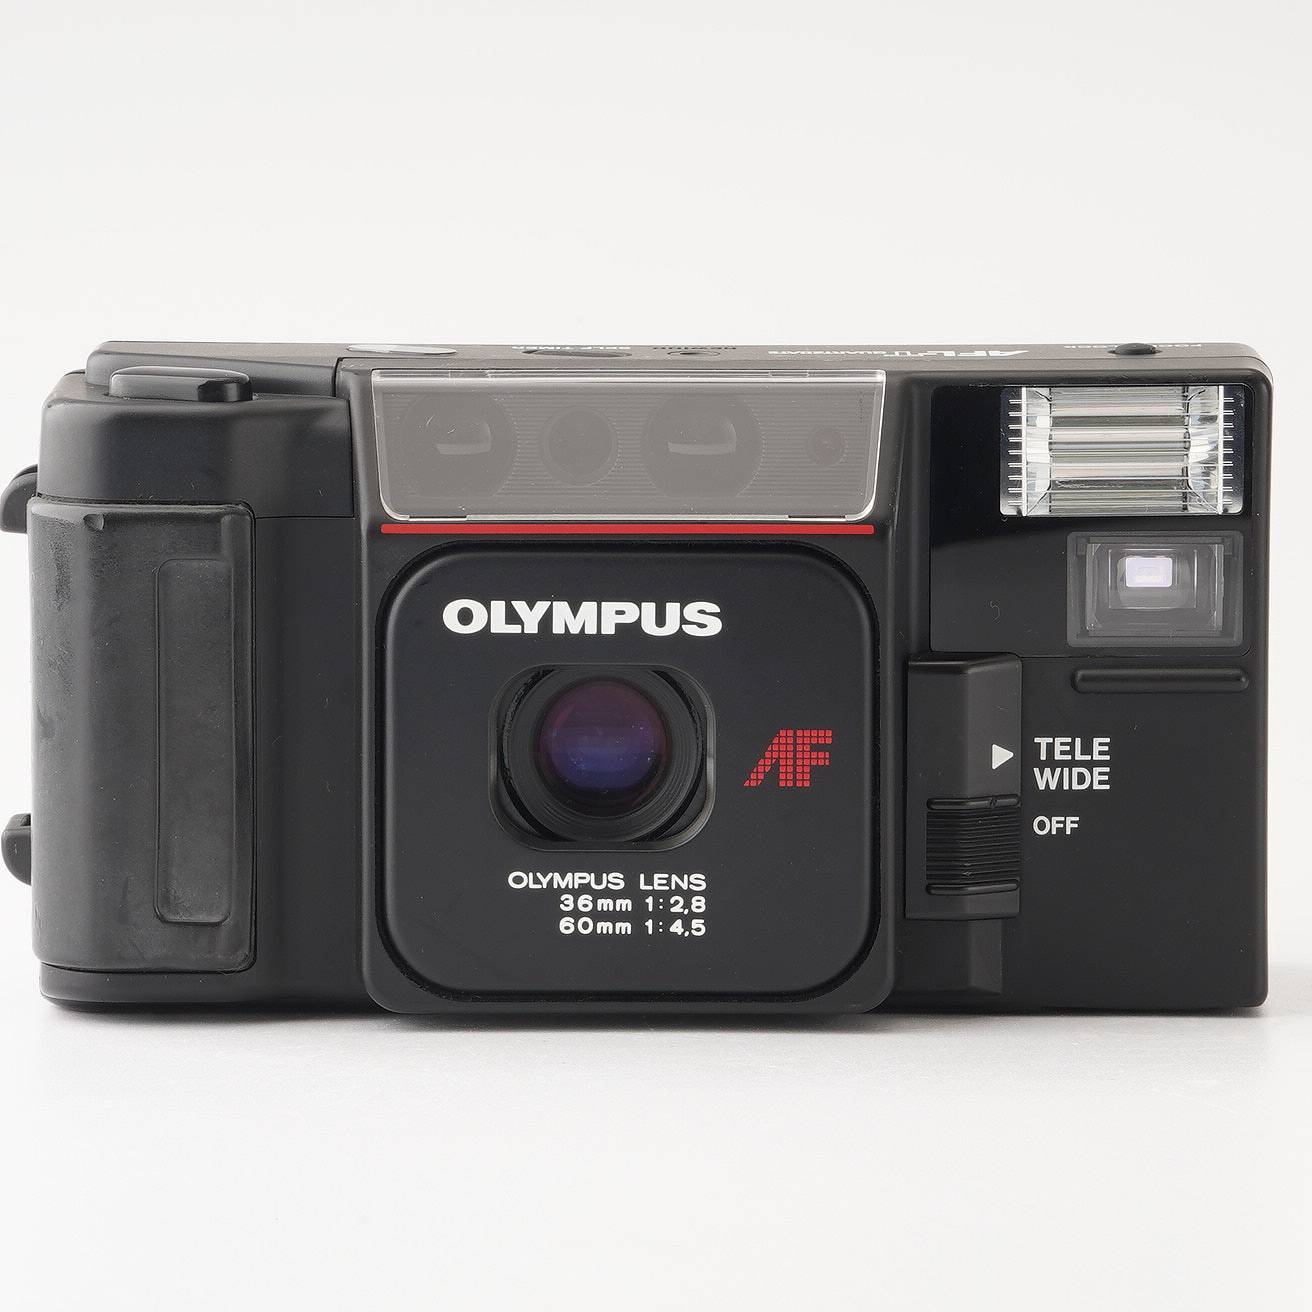  Olympus Olympus AFL-T QUARTZDATE / 36mm F2.8 60mm F4.5